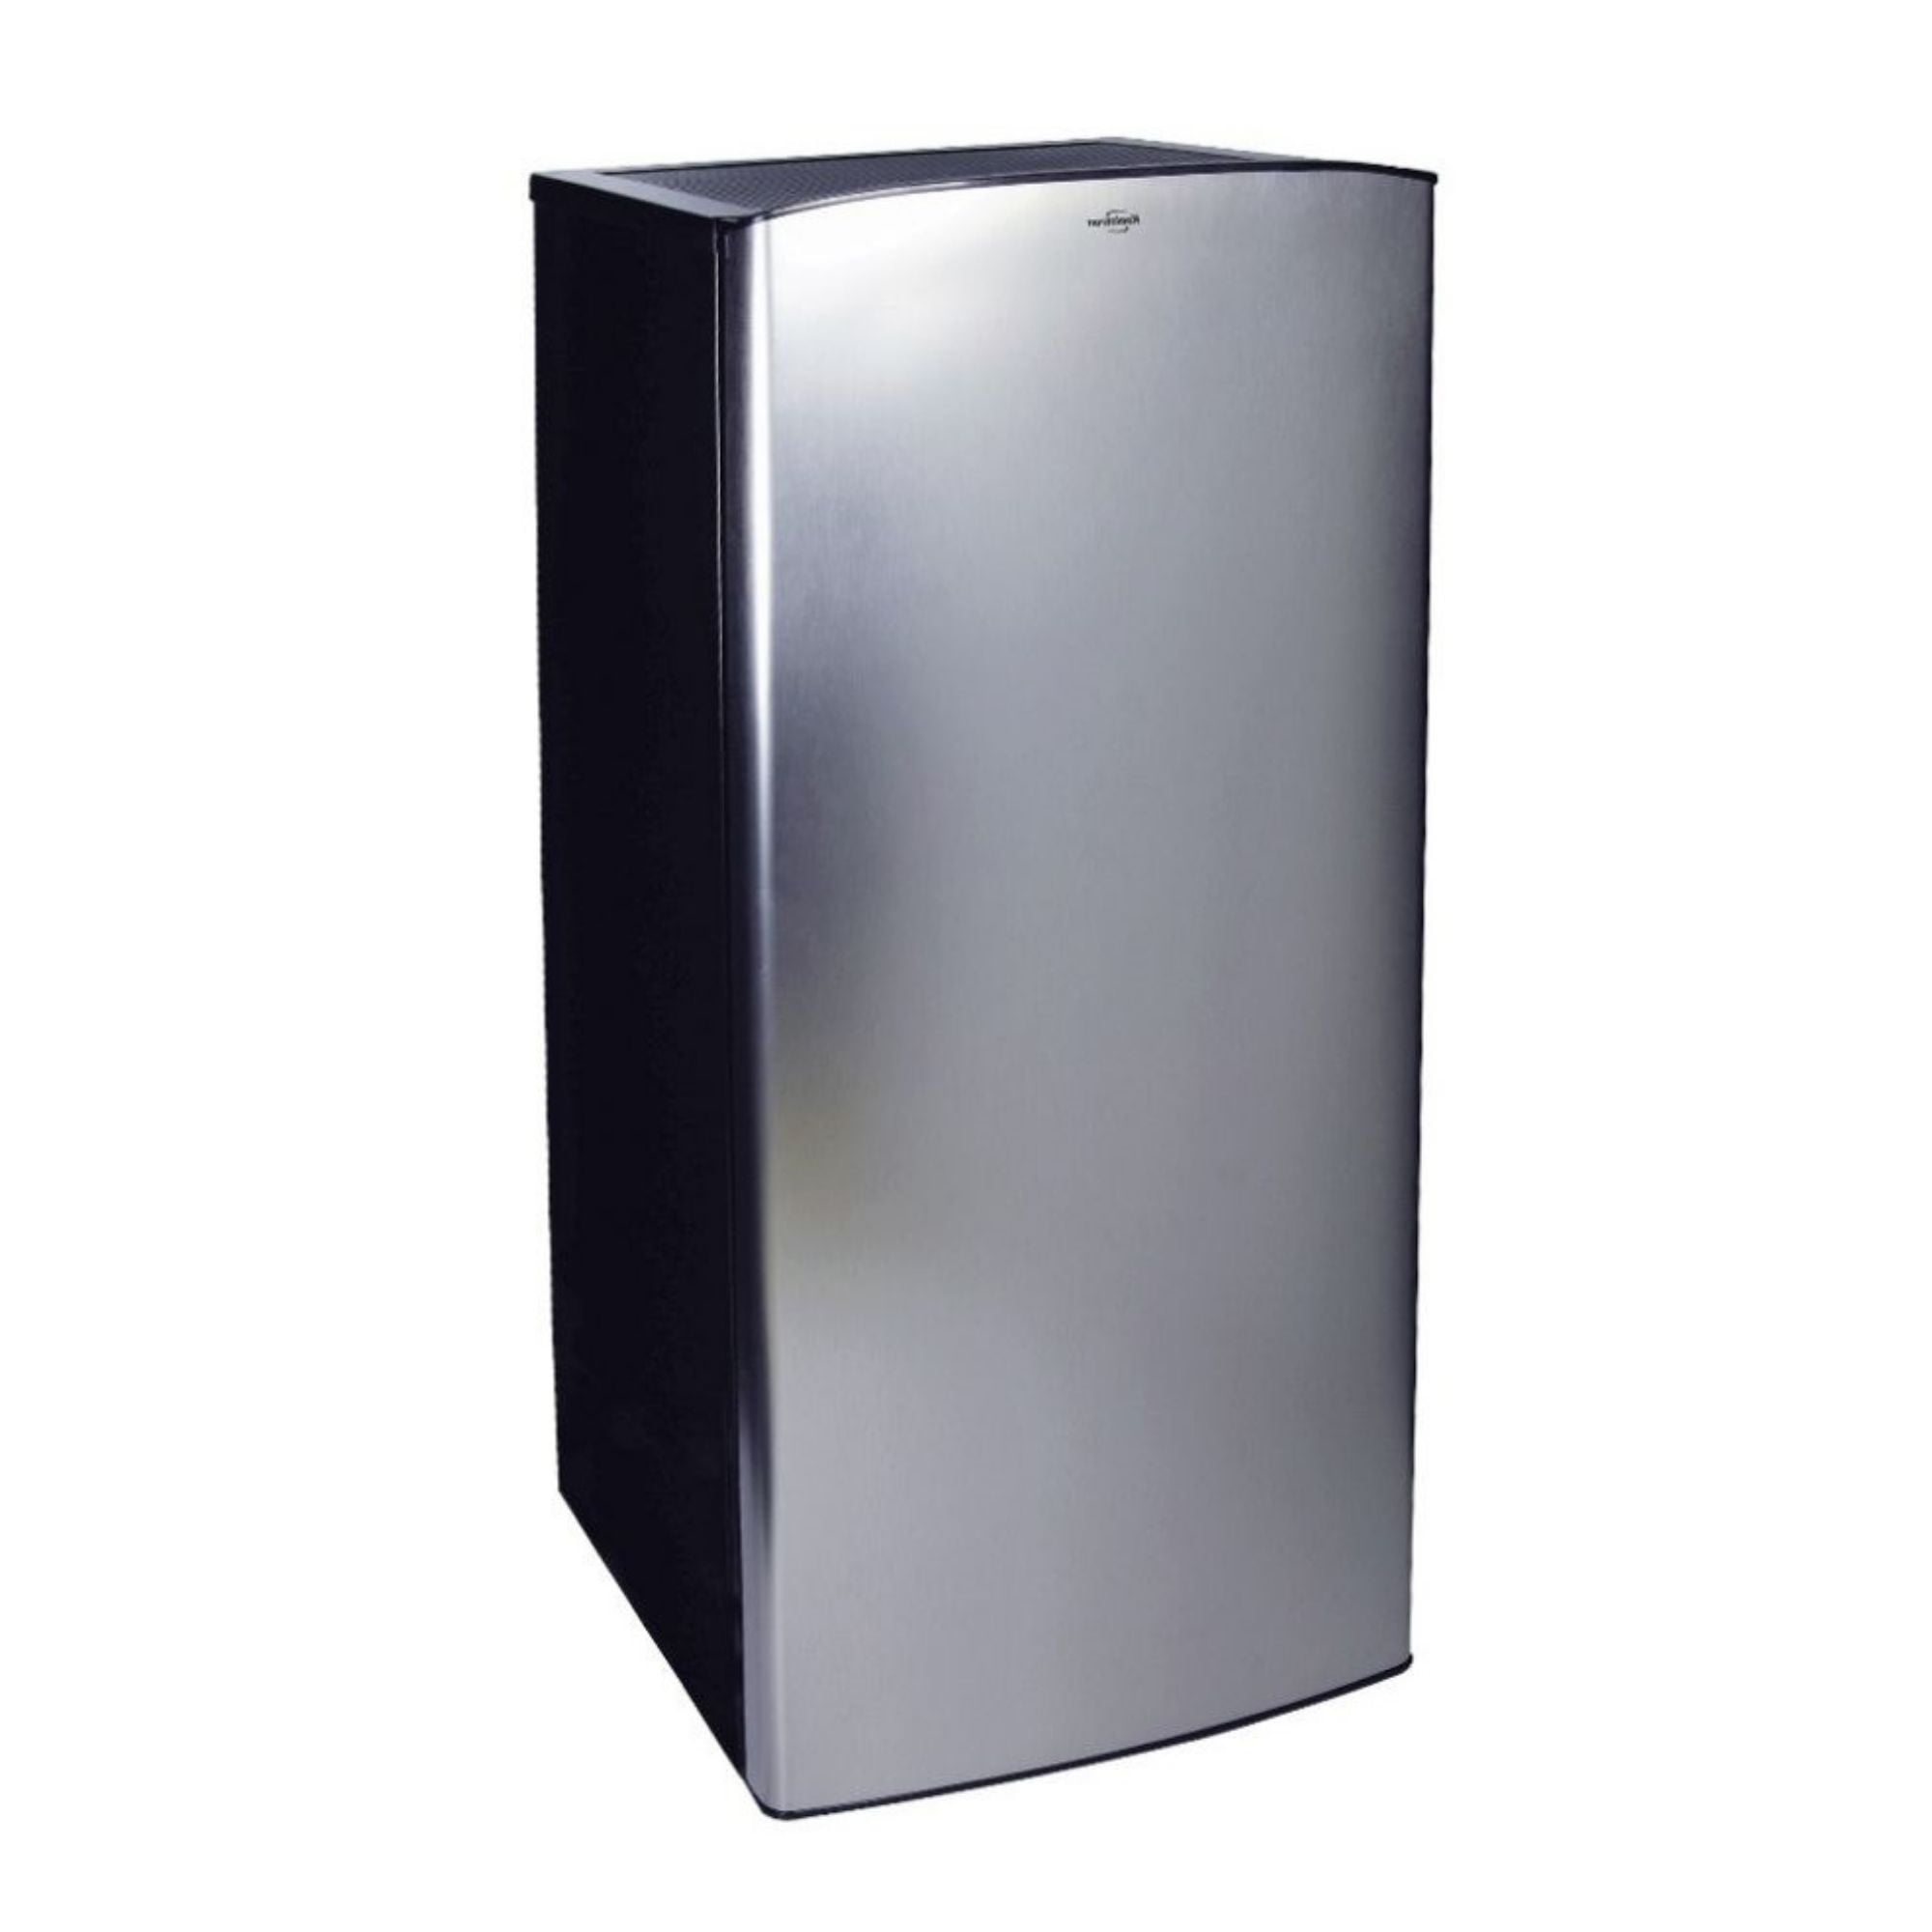 Whynter 1.1 Cu ft Upright Freezer with Lock, Black 